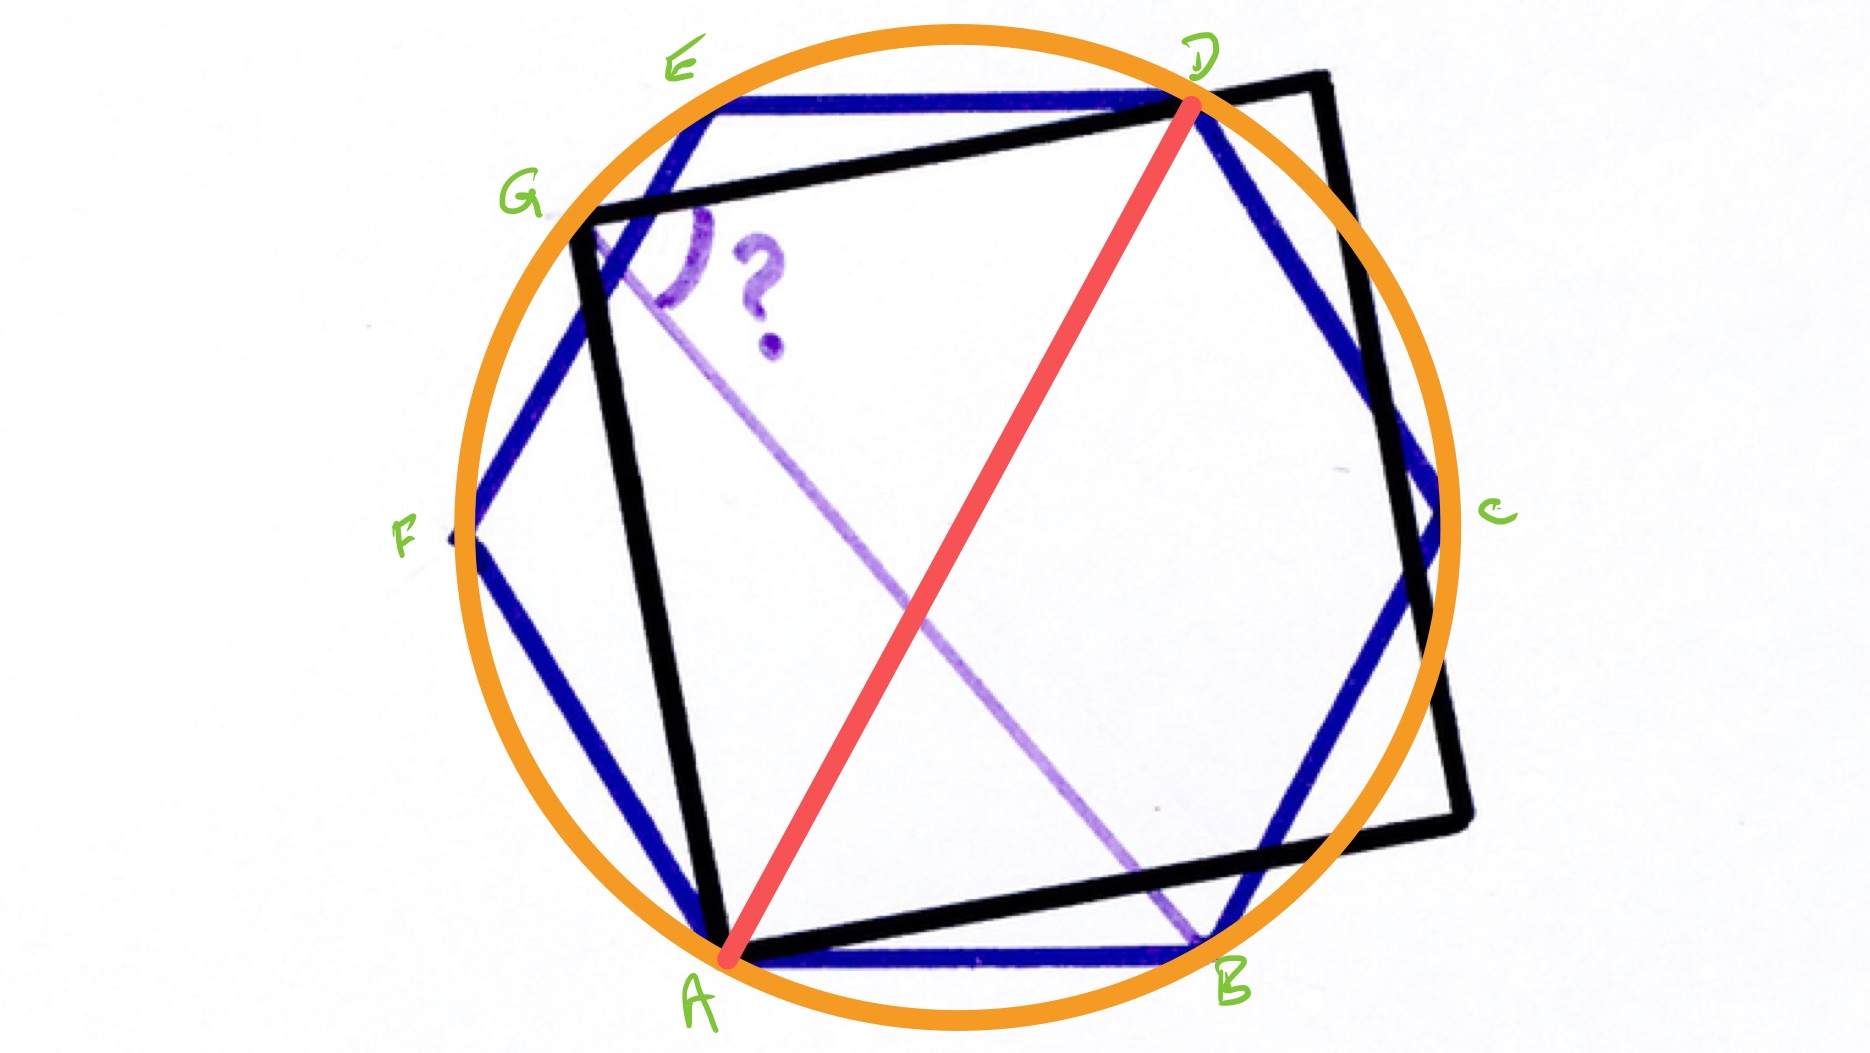 A square no a hexagon labelled